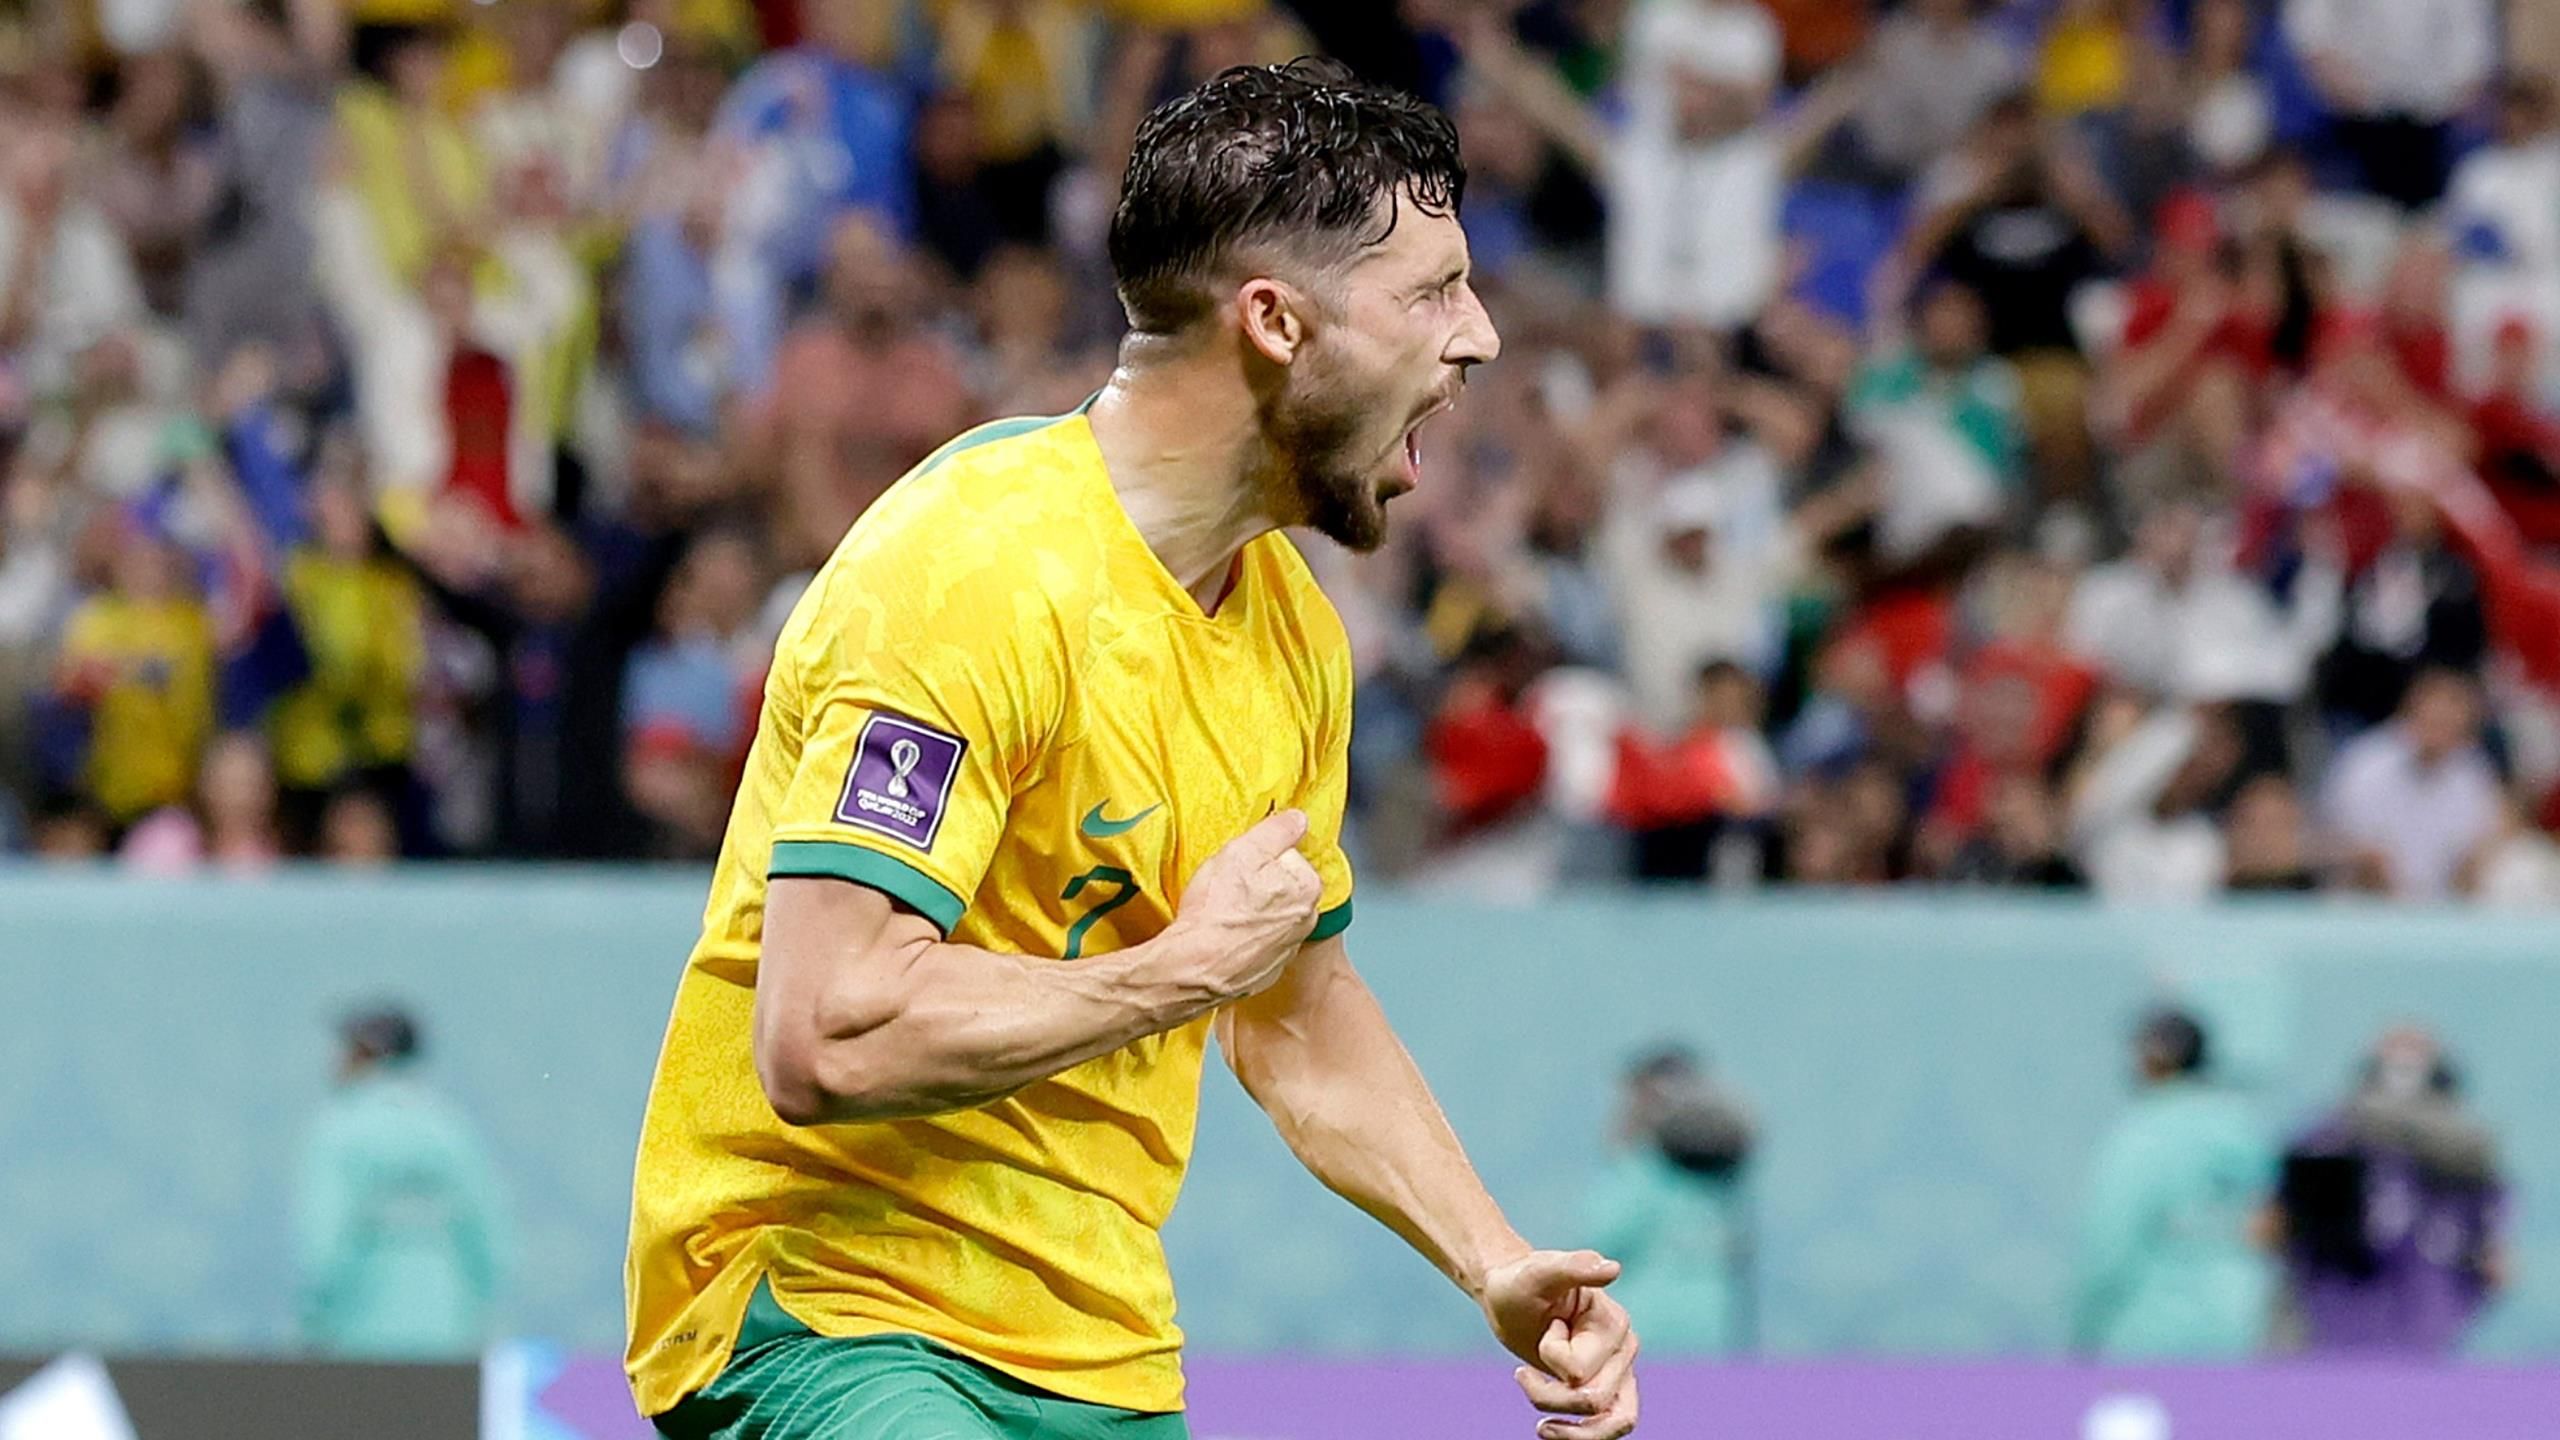 Australia 1-0 Denmark: Mathew Socceroos into last 16 behind France as Danes out -